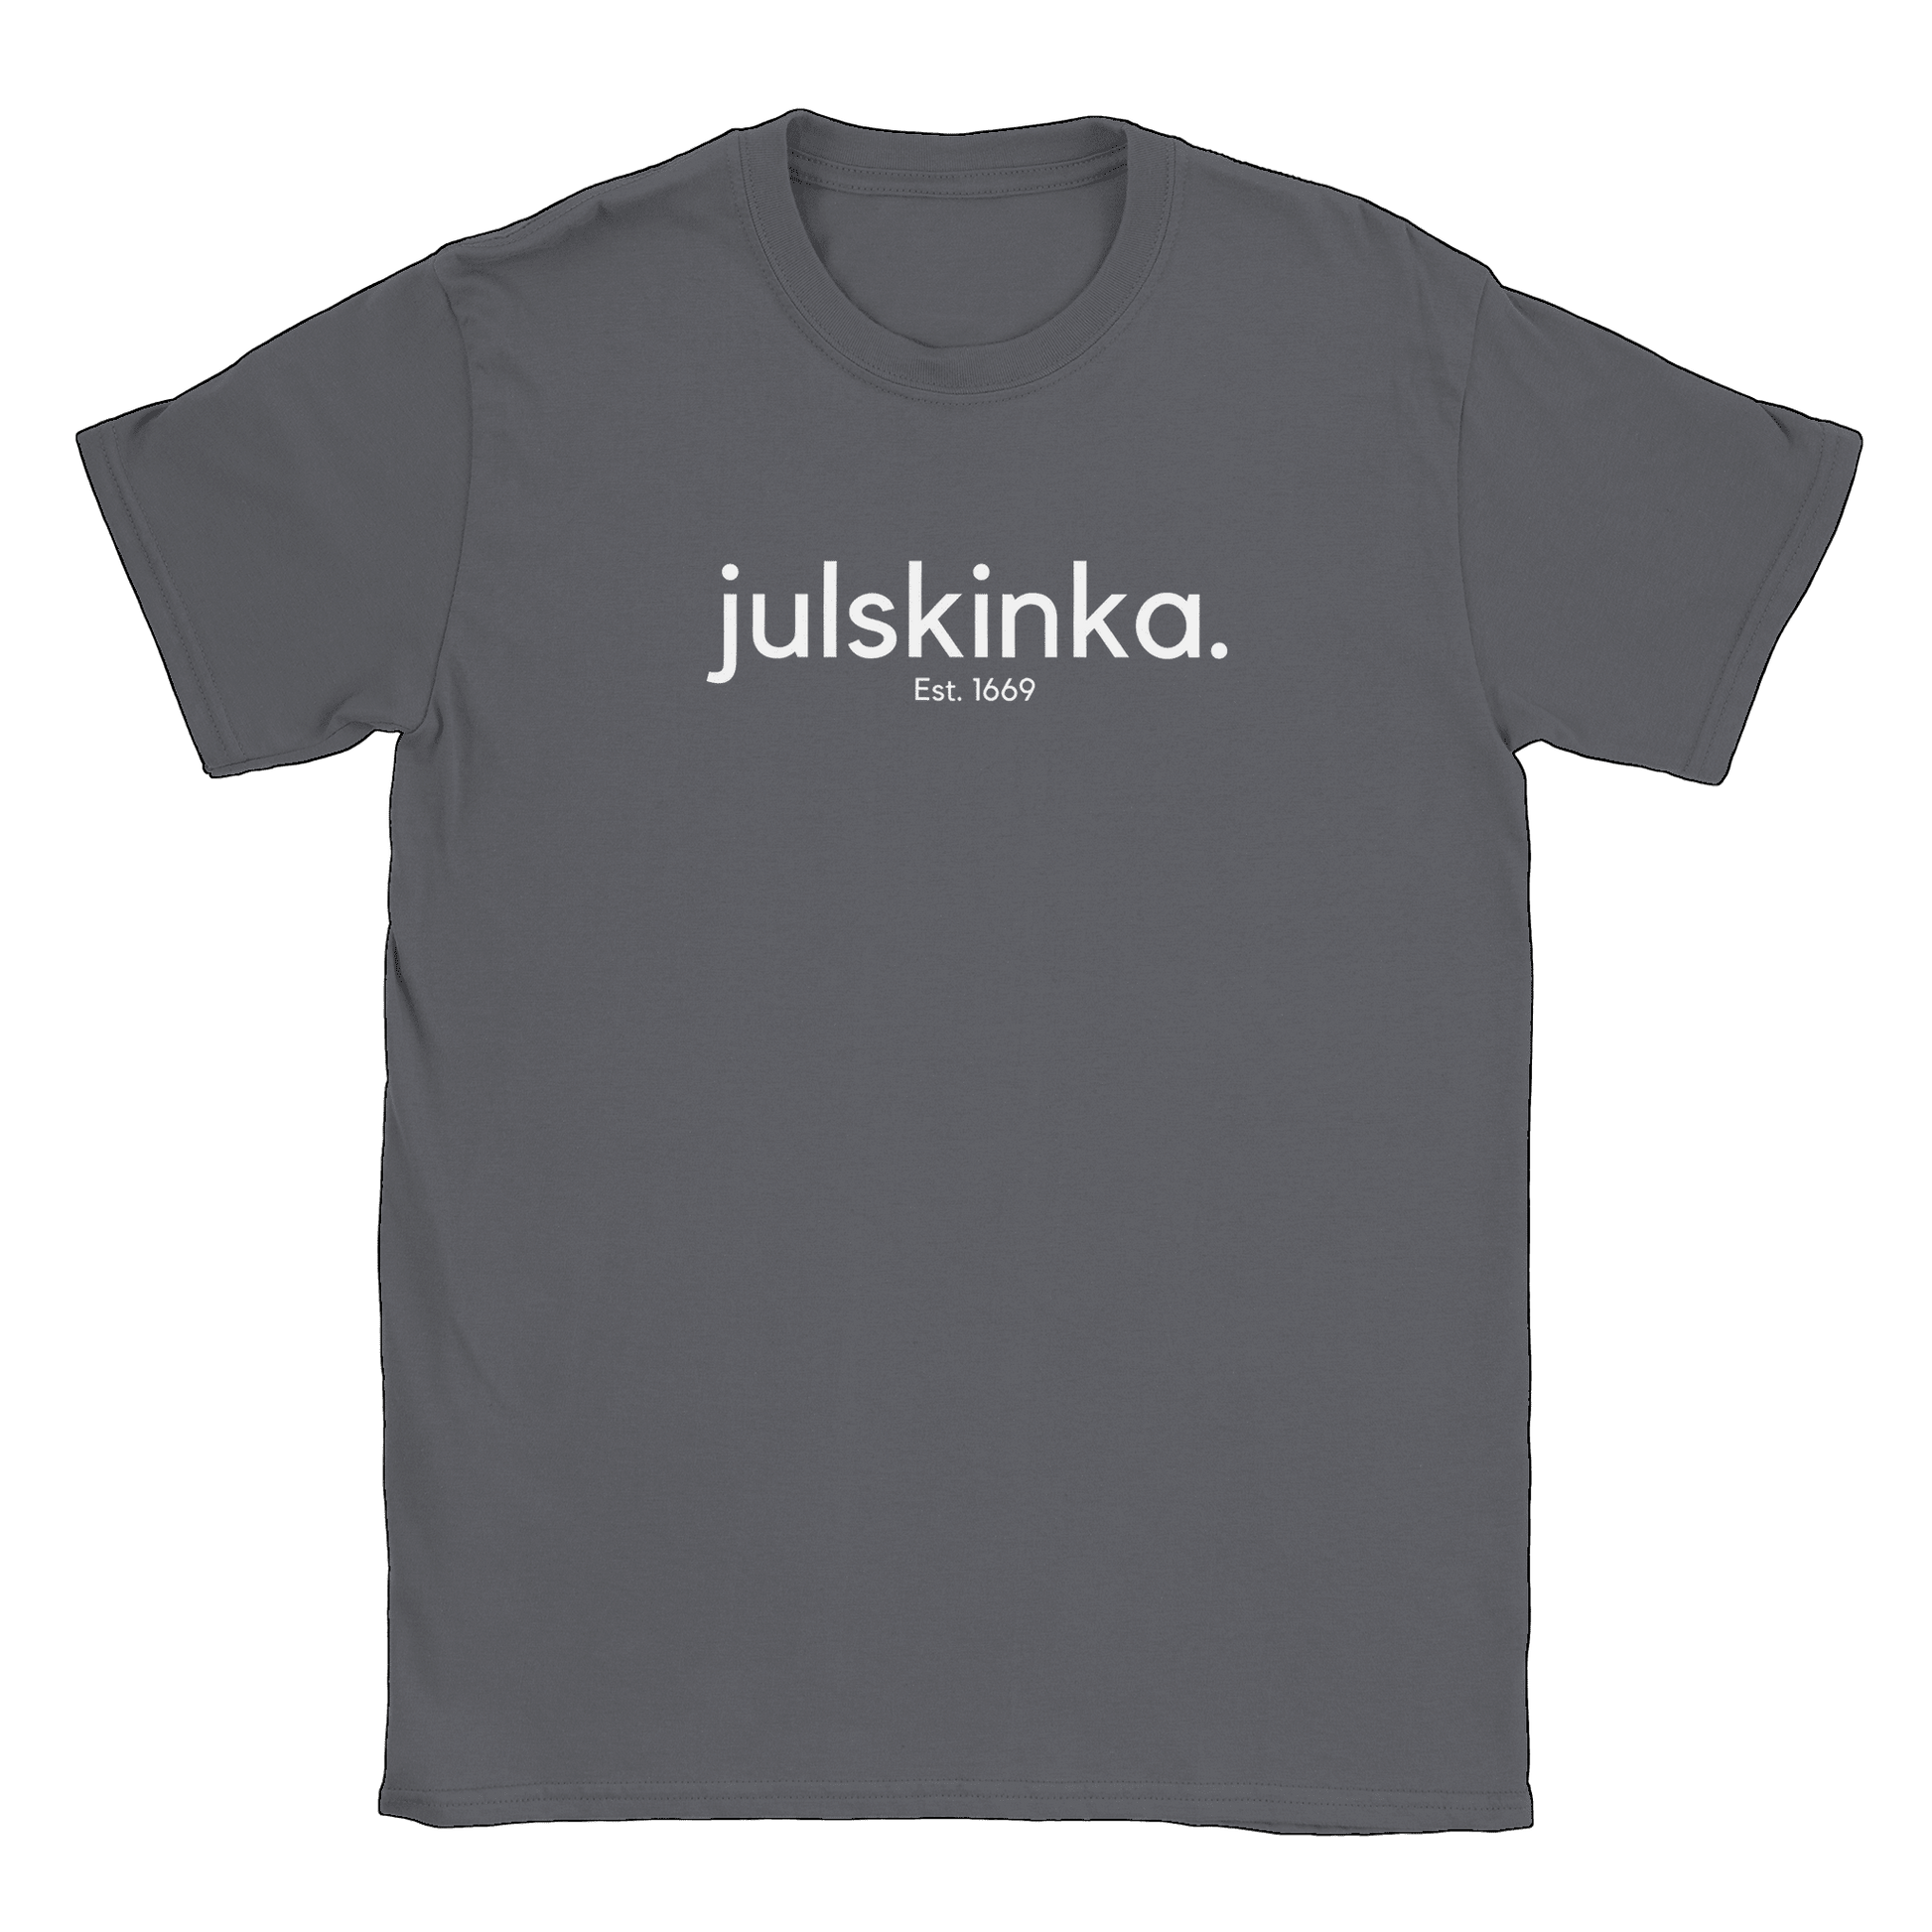 Julskinka - T-shirt Charcoal